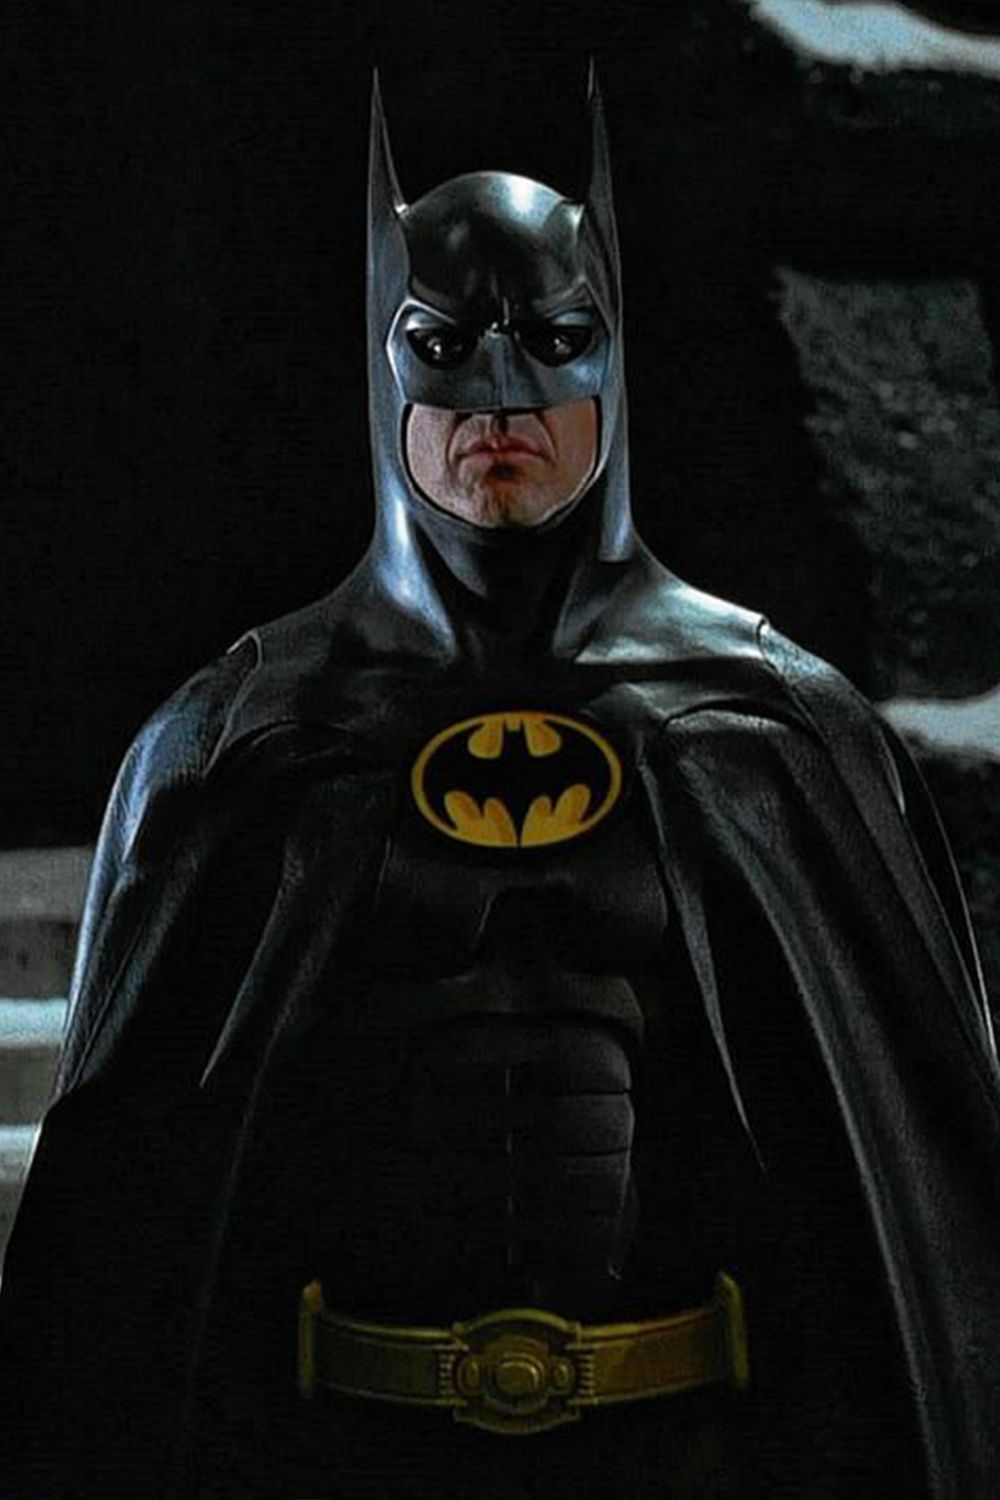 Batman Returns by Tim Burton Keaton. Batman artwork, Batman film, Batman vs joker